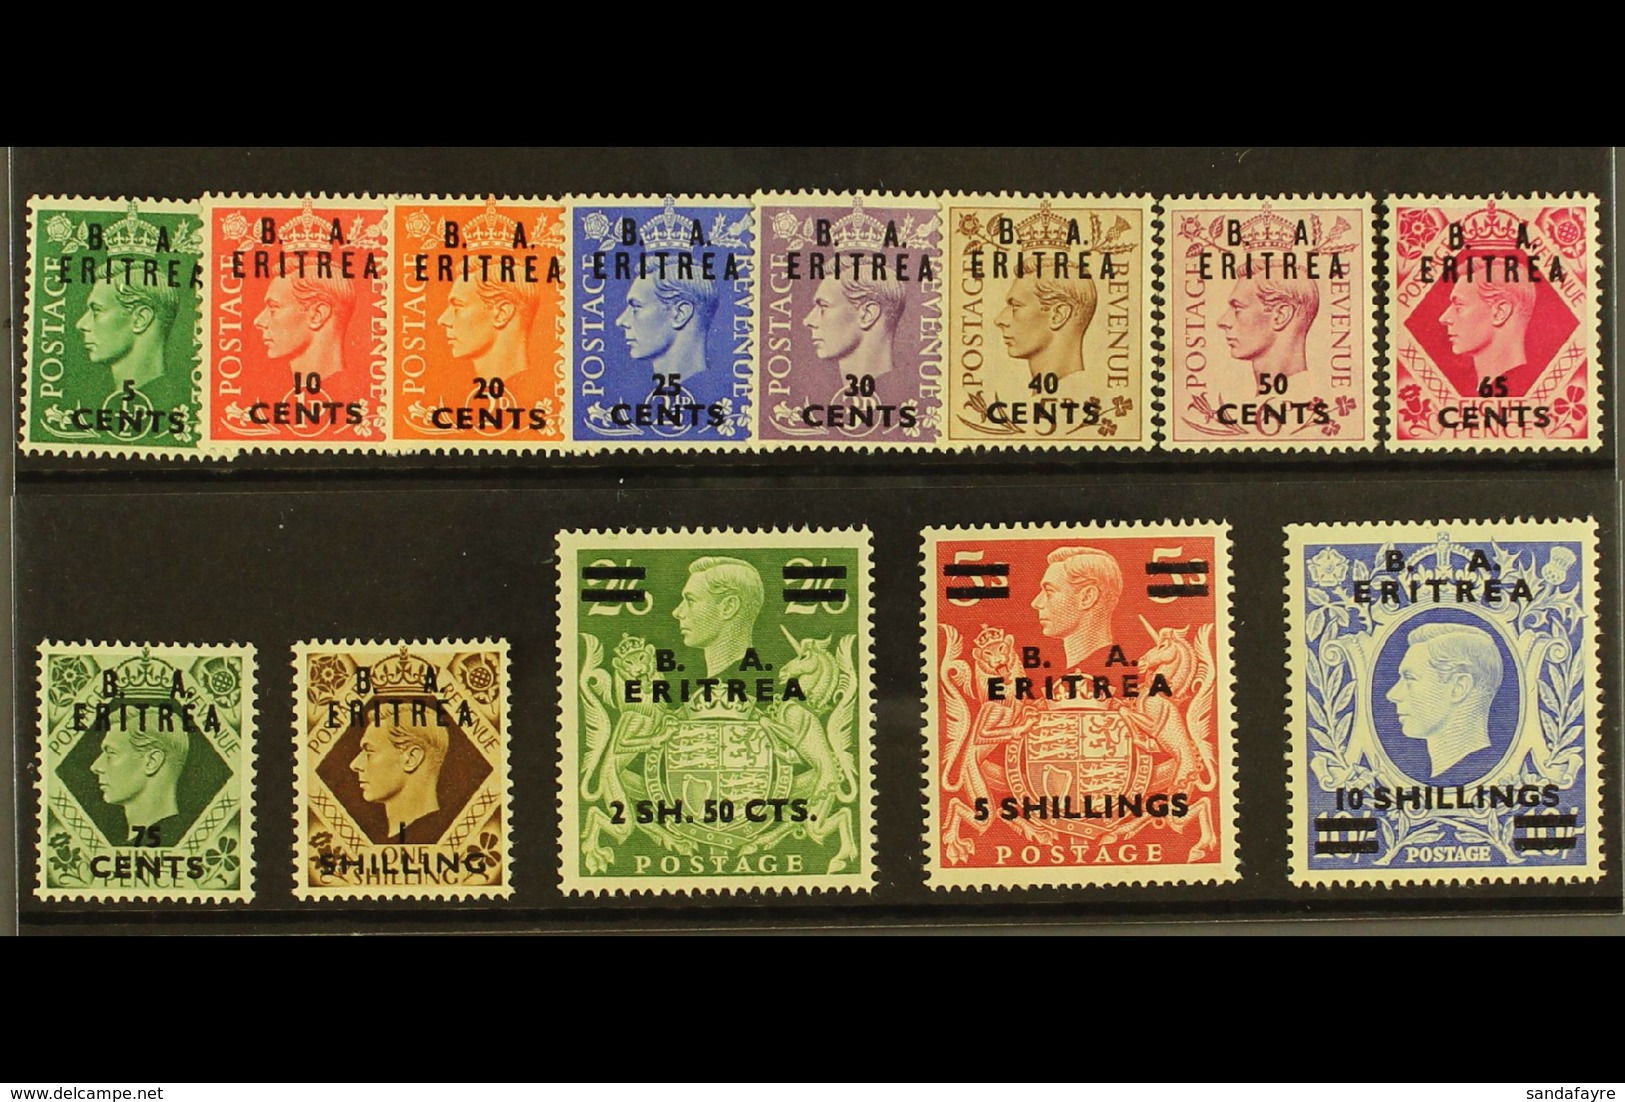 ERITREA 1950 "B. A. ERITREA" Complete Set, SG E13/25, Very Fine Mint, Most (including Top Three Values) Never Hinged. (1 - Afrique Orientale Italienne